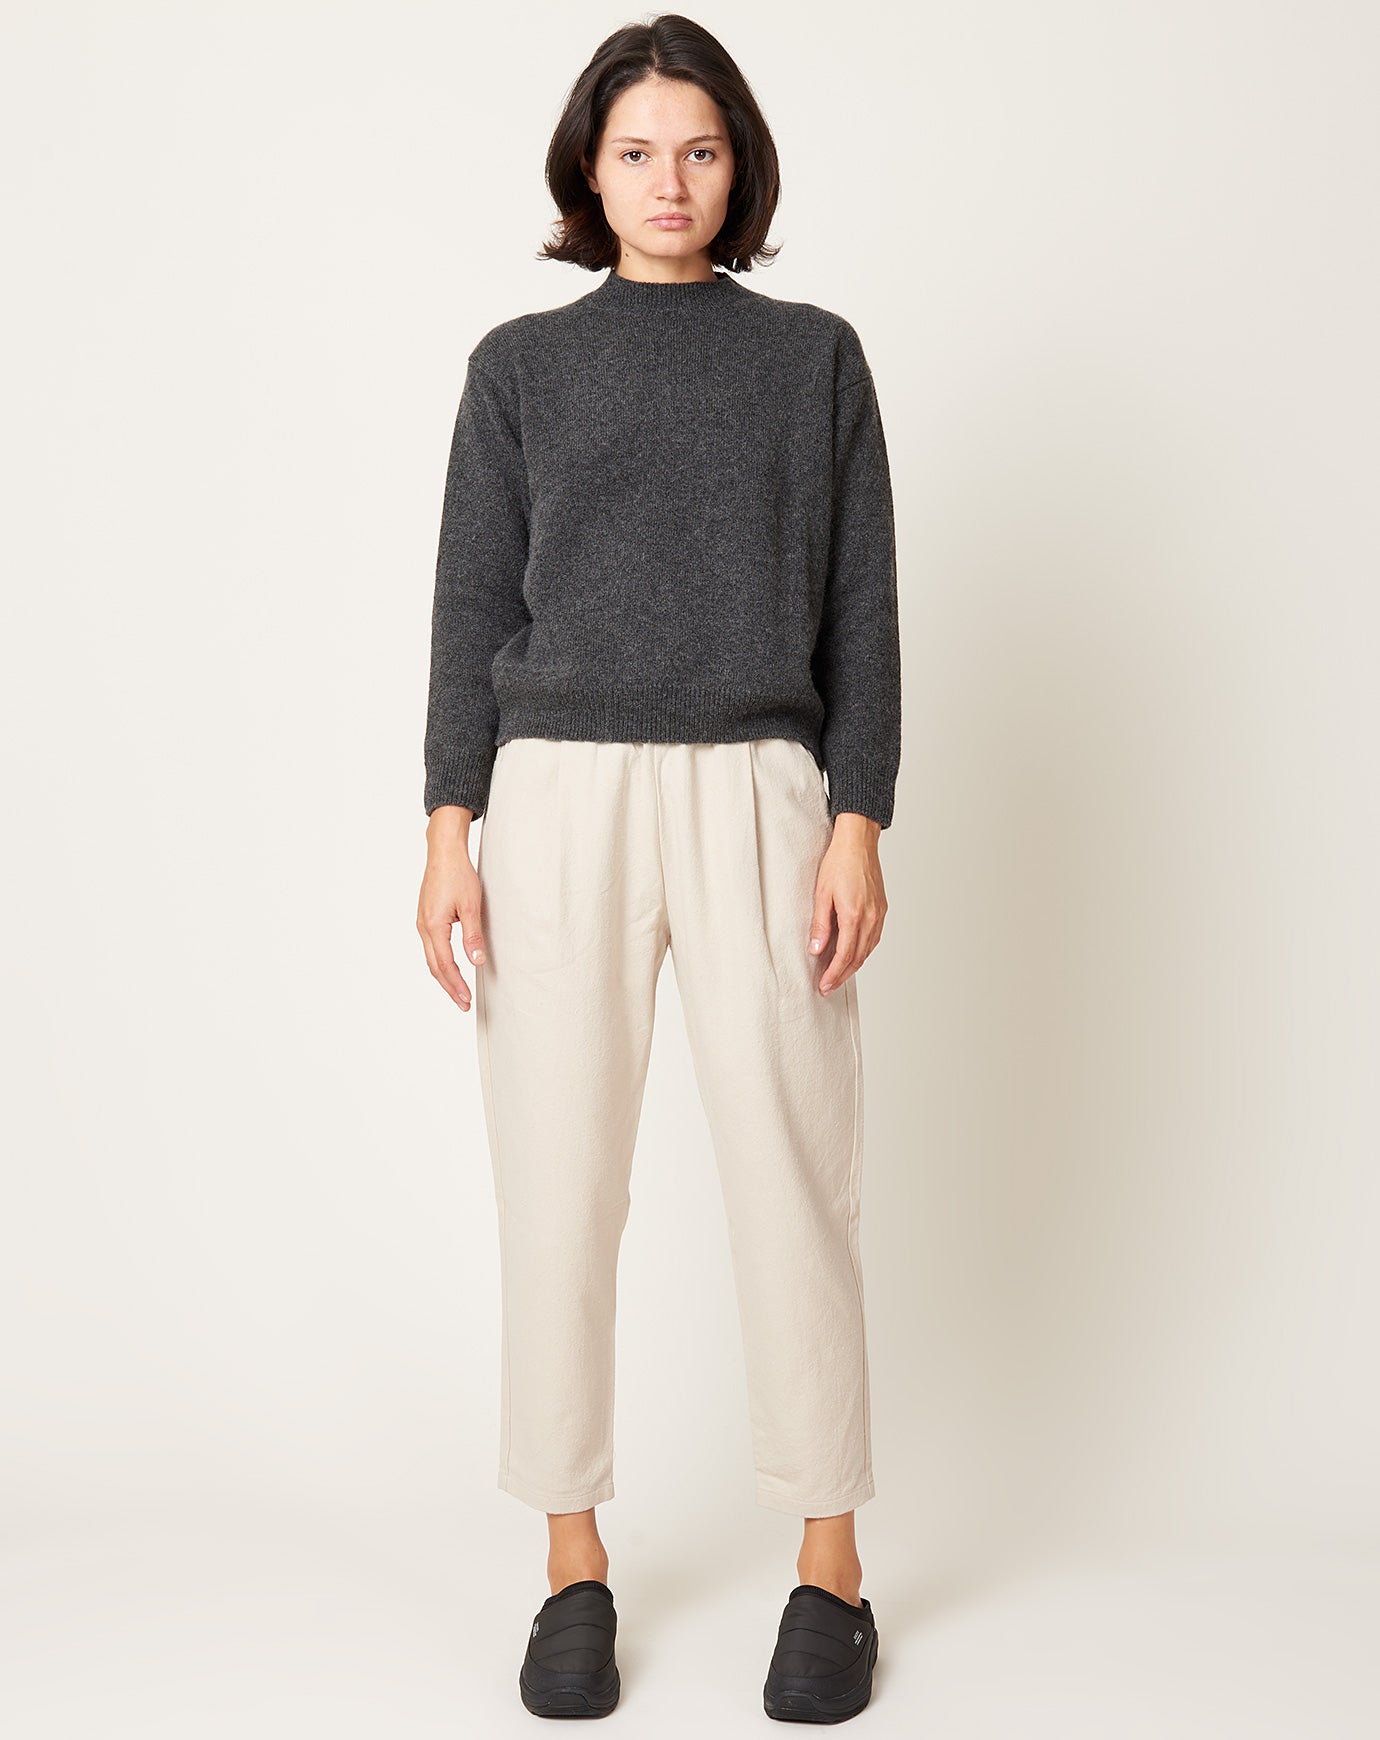 Evam Eva Cashmere Beige Pullover Shirt Top Sweater Women's Size 2 - Please  Read